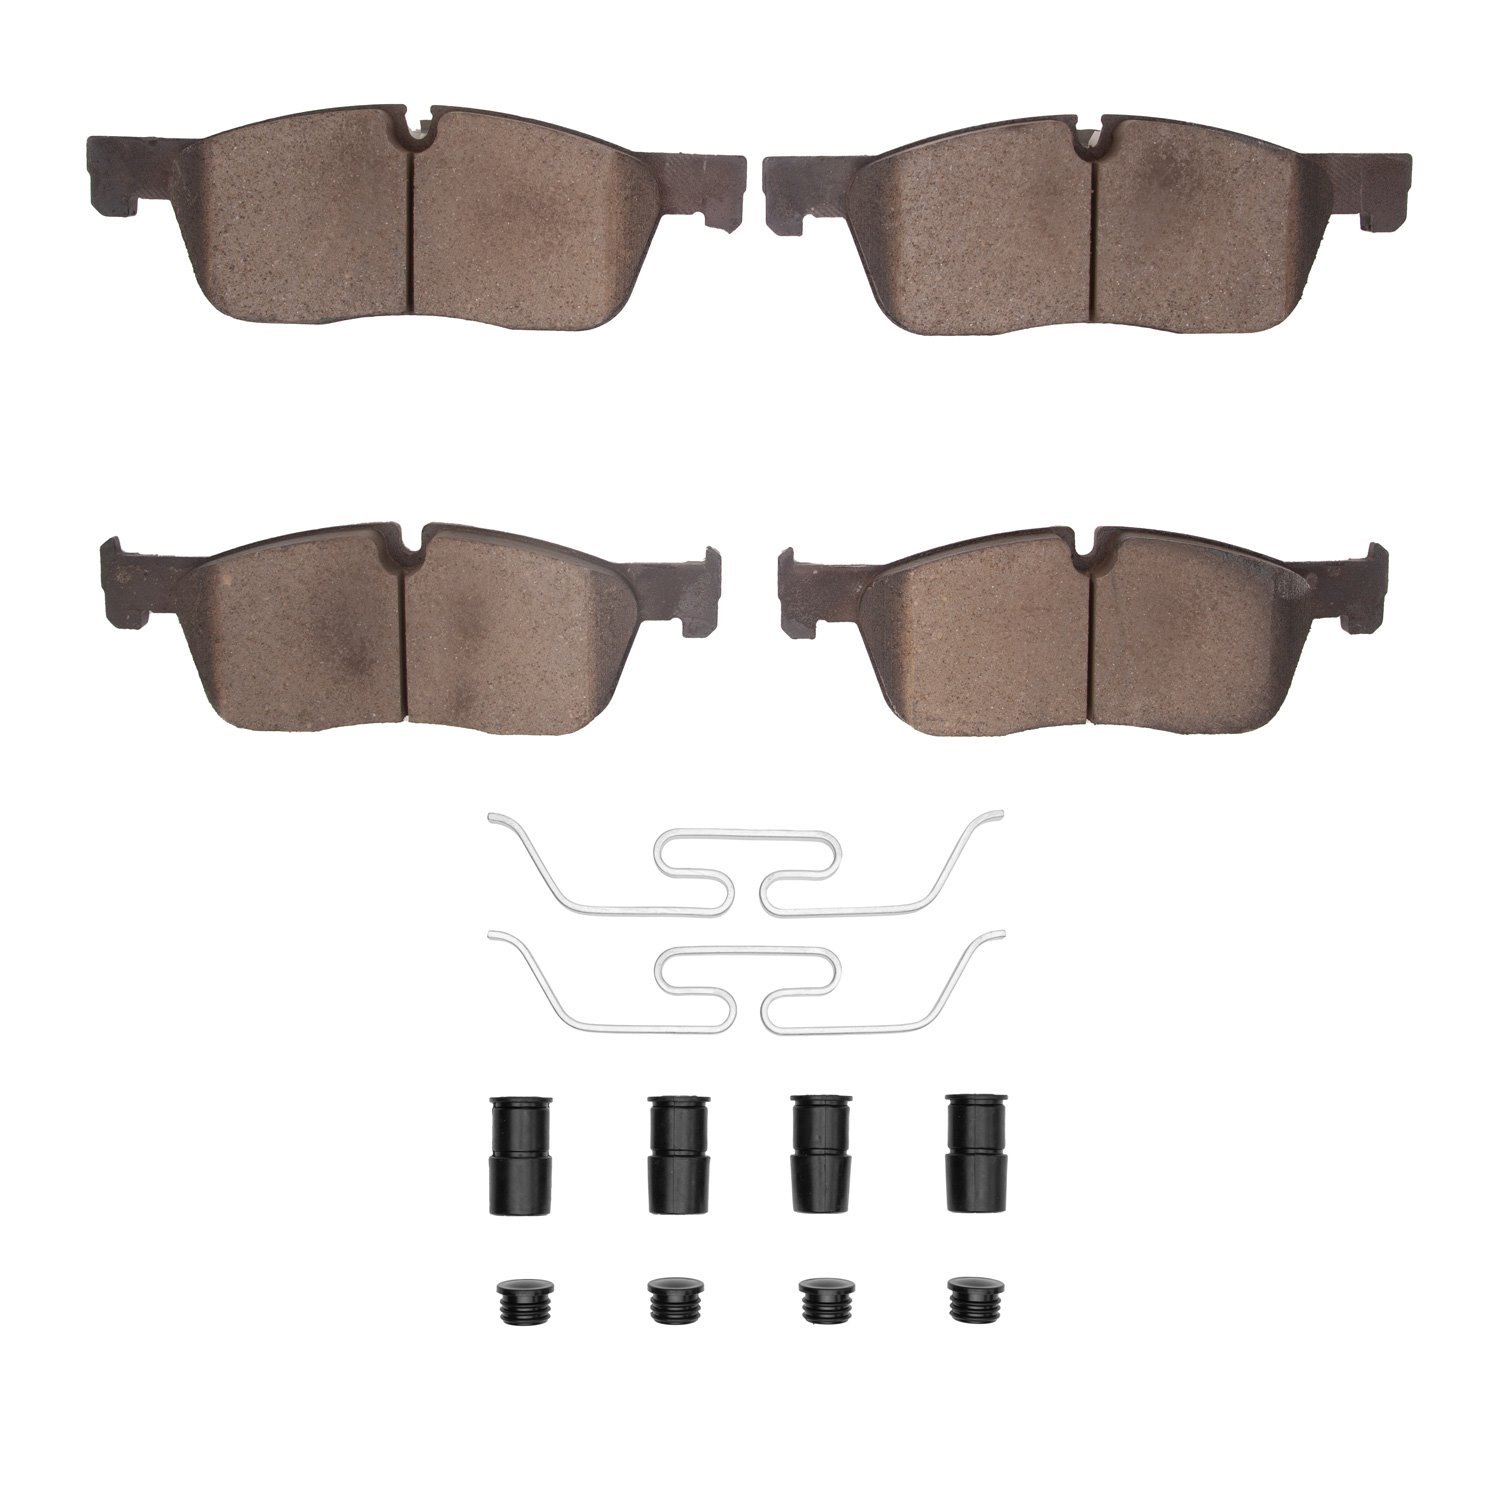 Optimum OE Brake Pads & Hardware Kit, 2015-2019 Fits Multiple Makes/Models, Position: Front